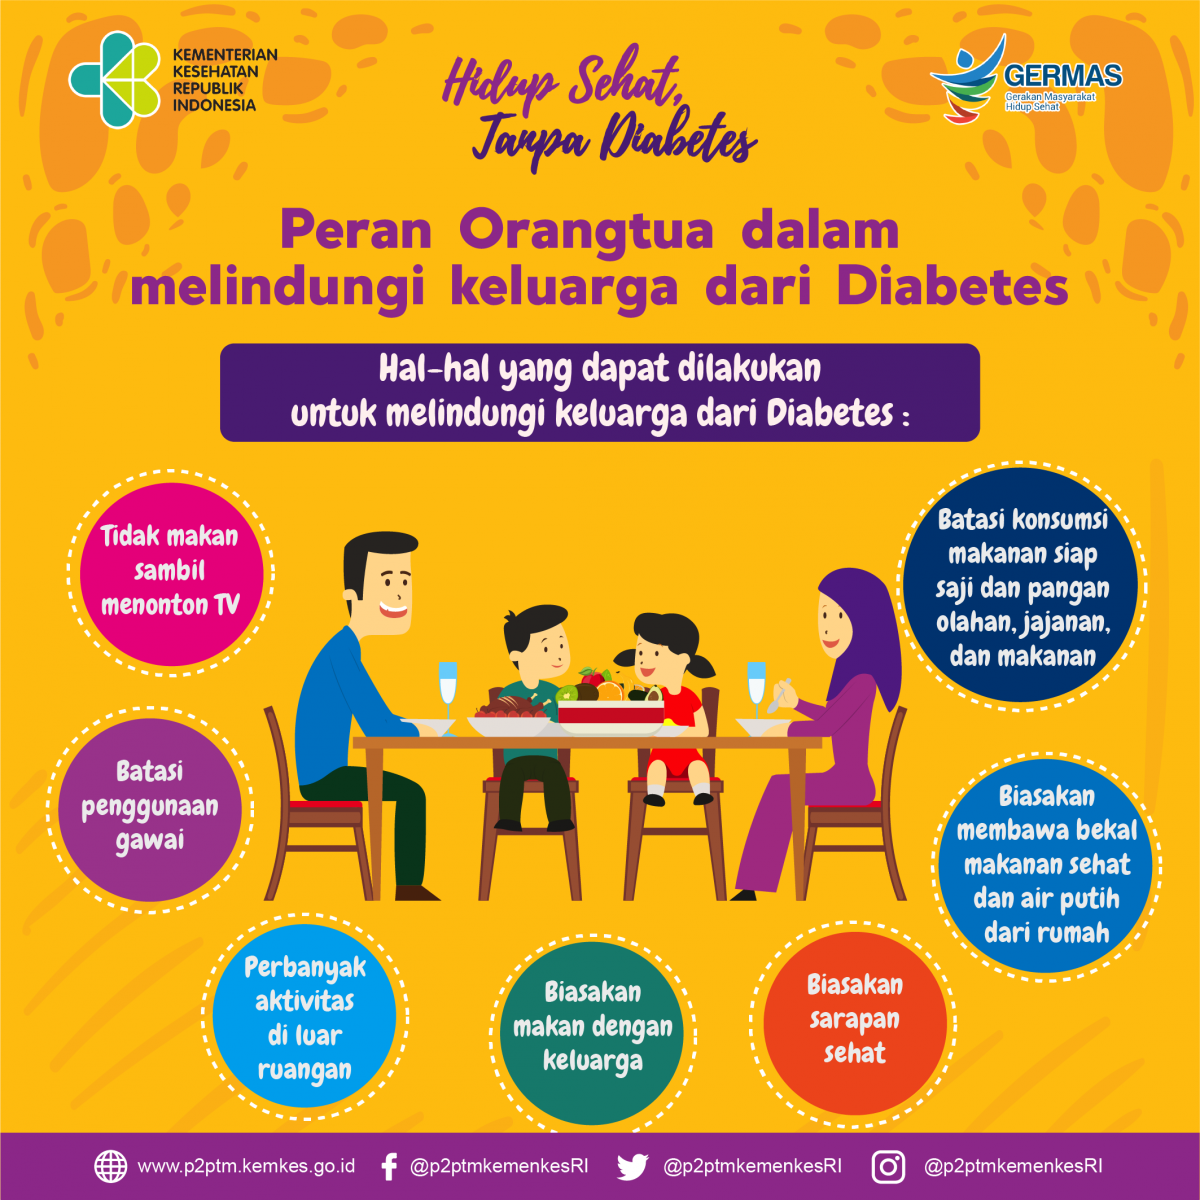 Hal-hal yang dapat dilakukan untuk melindungi keluarga dari Diabetes